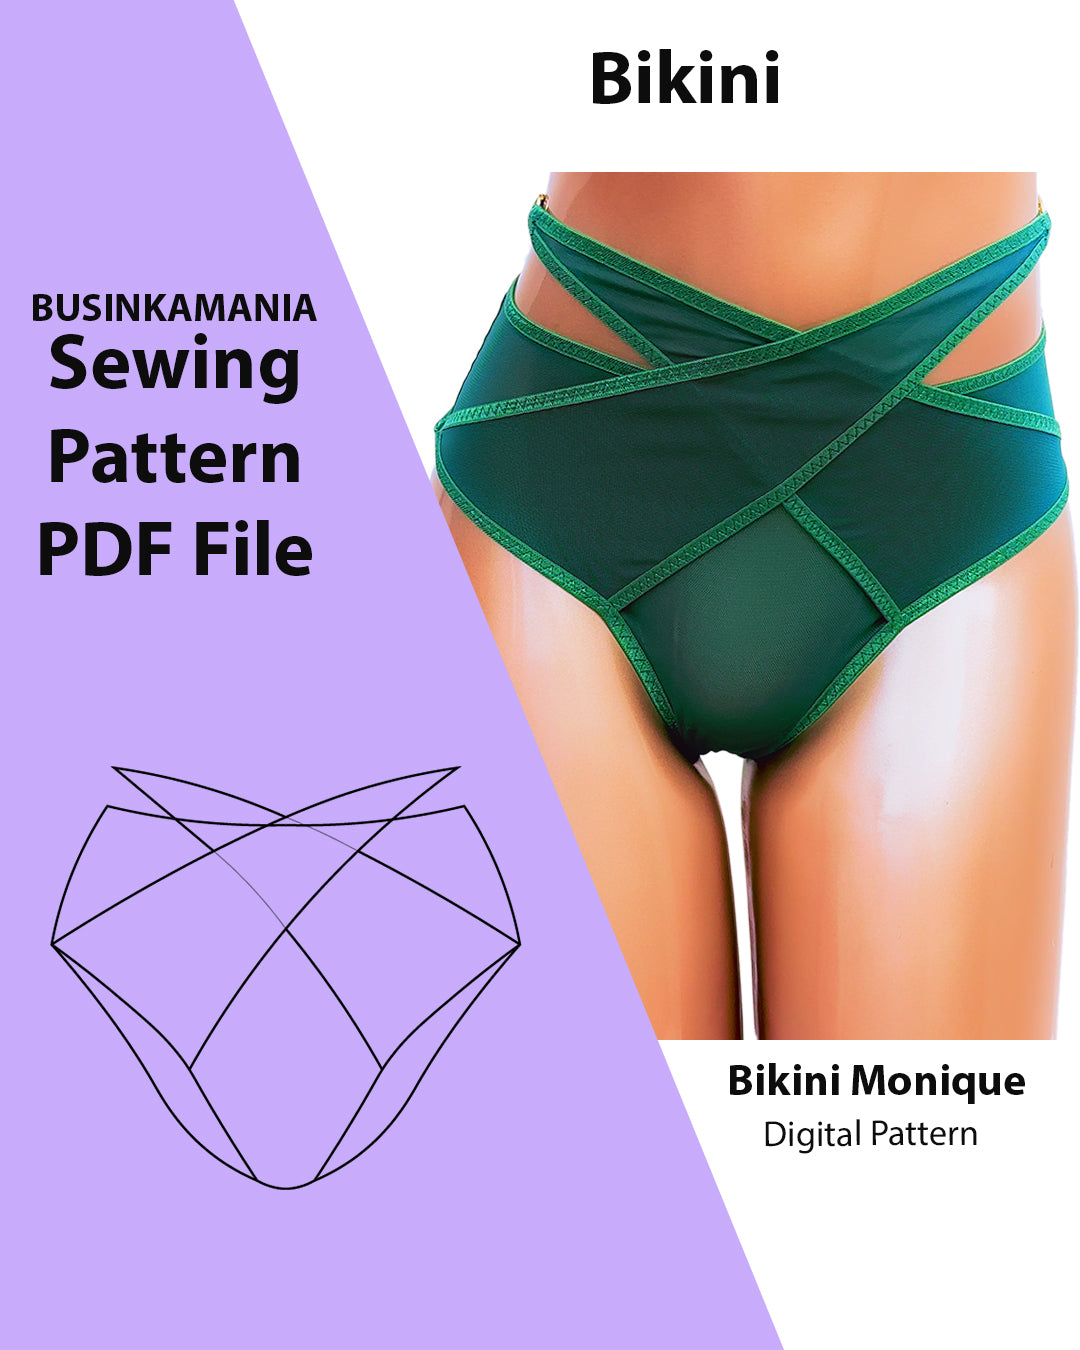 Bikini Monique Sewing Pattern – BusinkaMania